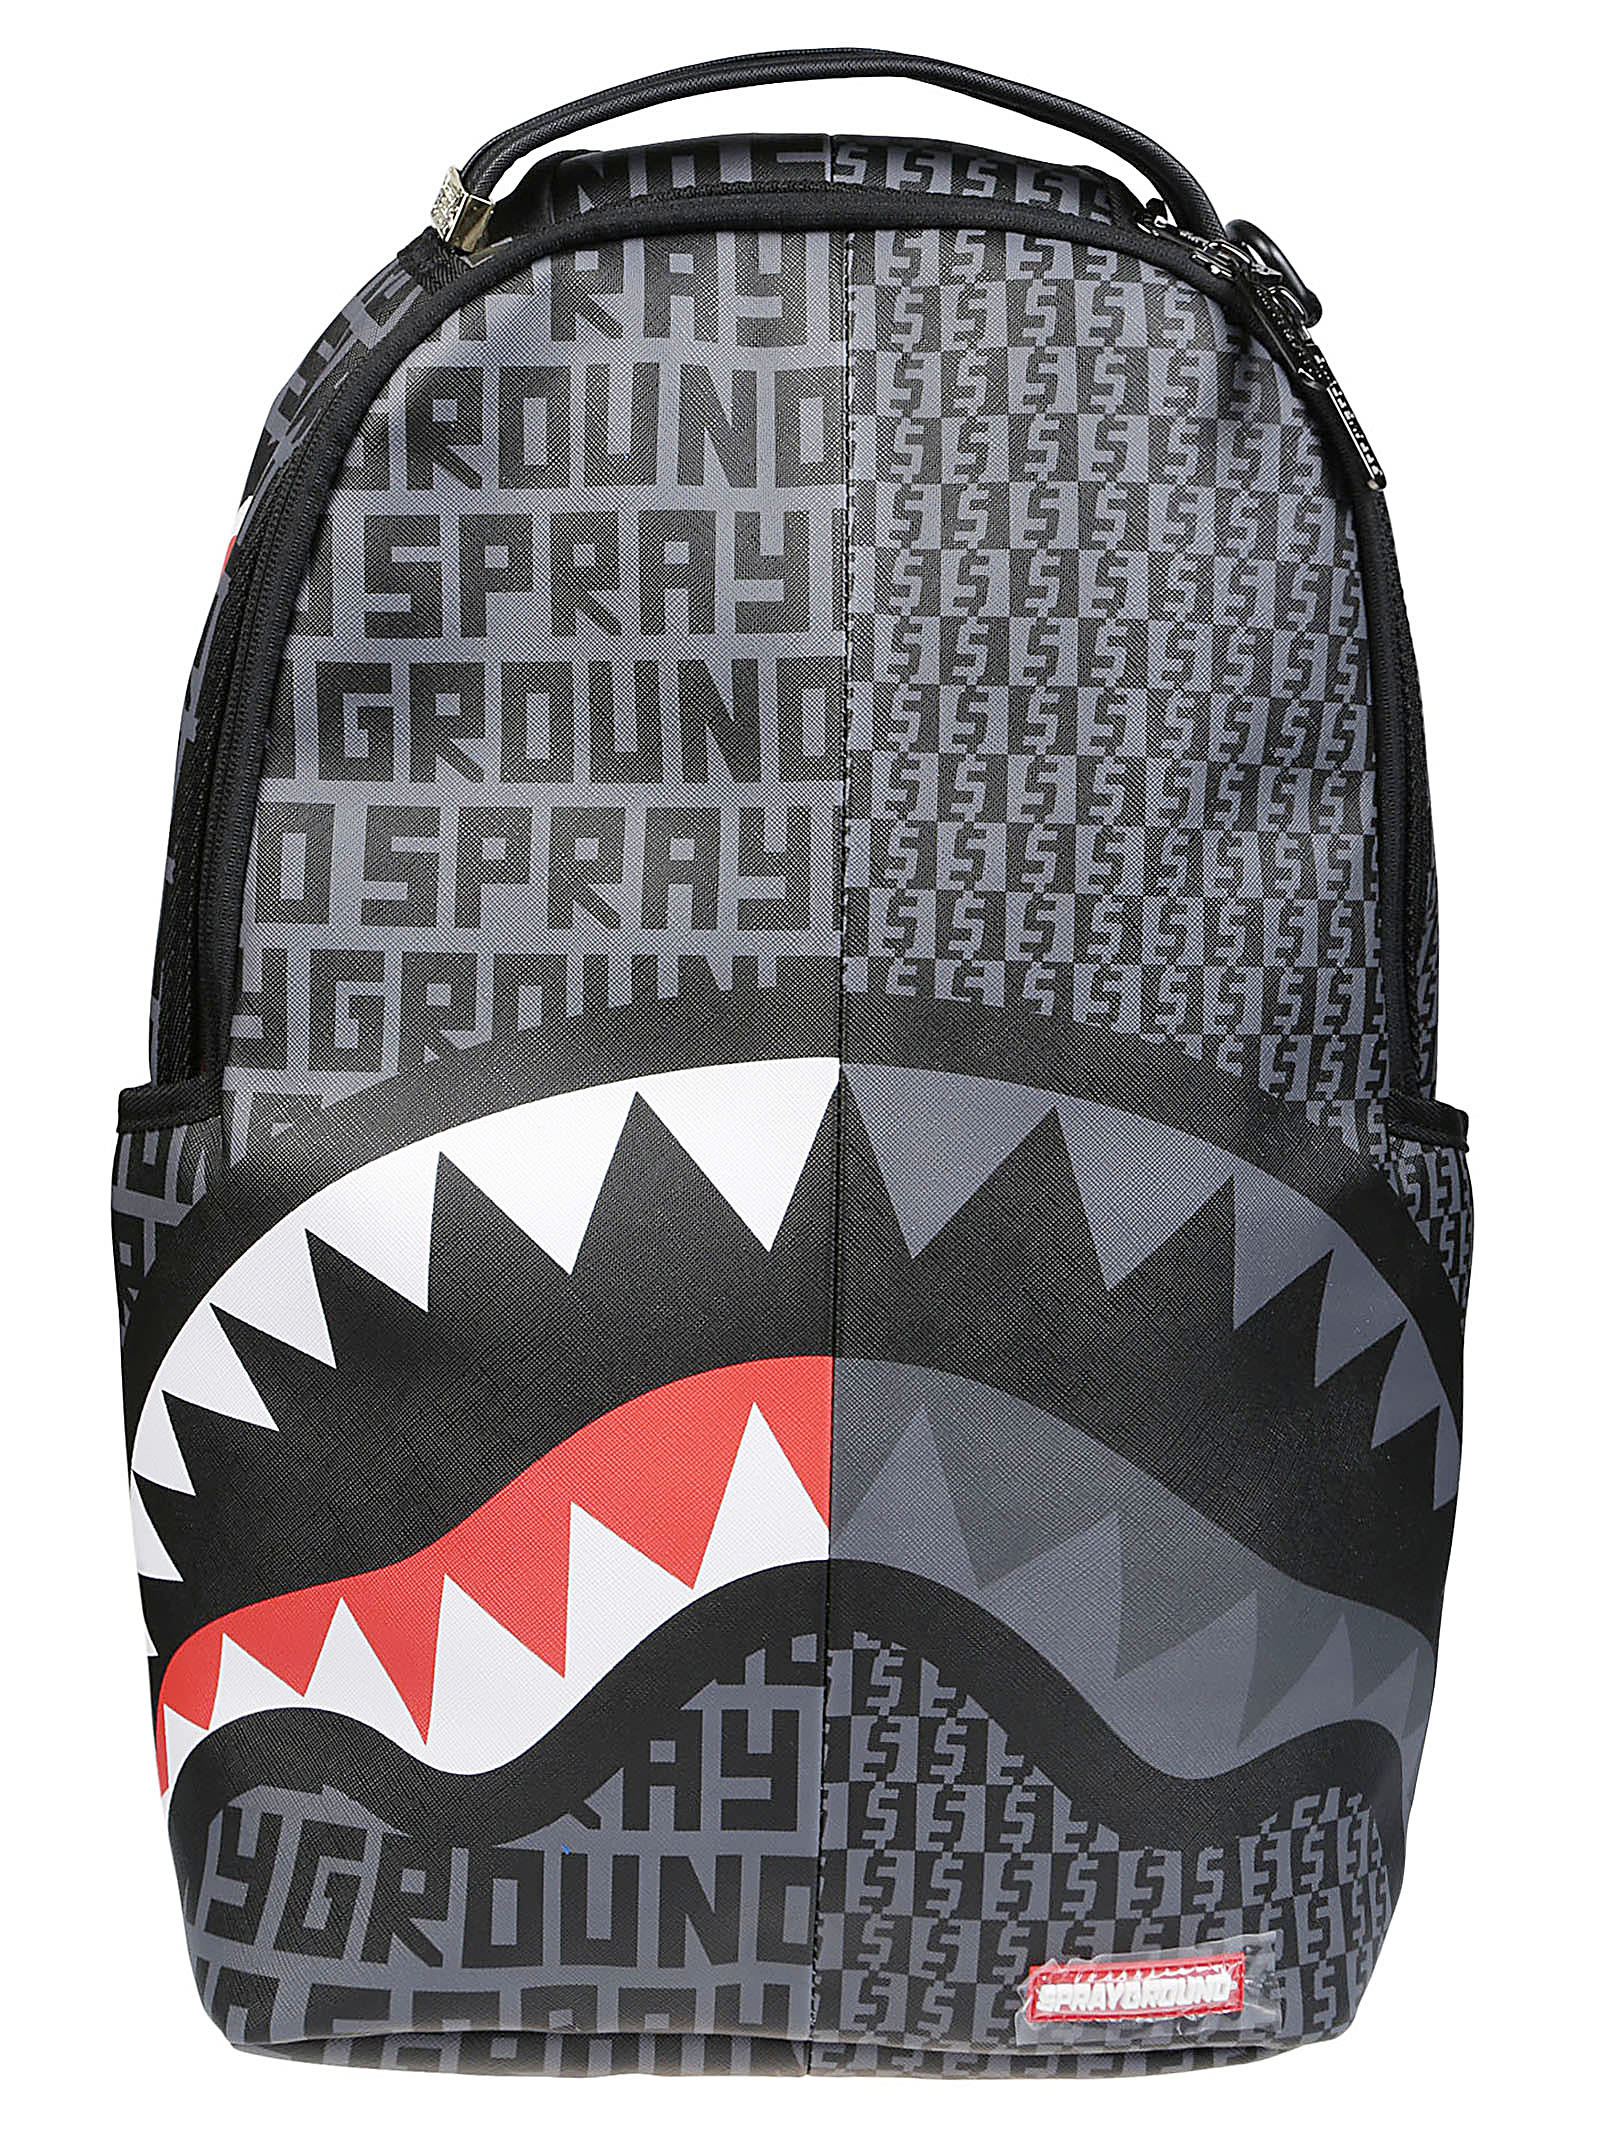 SPRAYGROUND: travel bag for man - Brown  Sprayground travel bag  910D5512NSZ online at